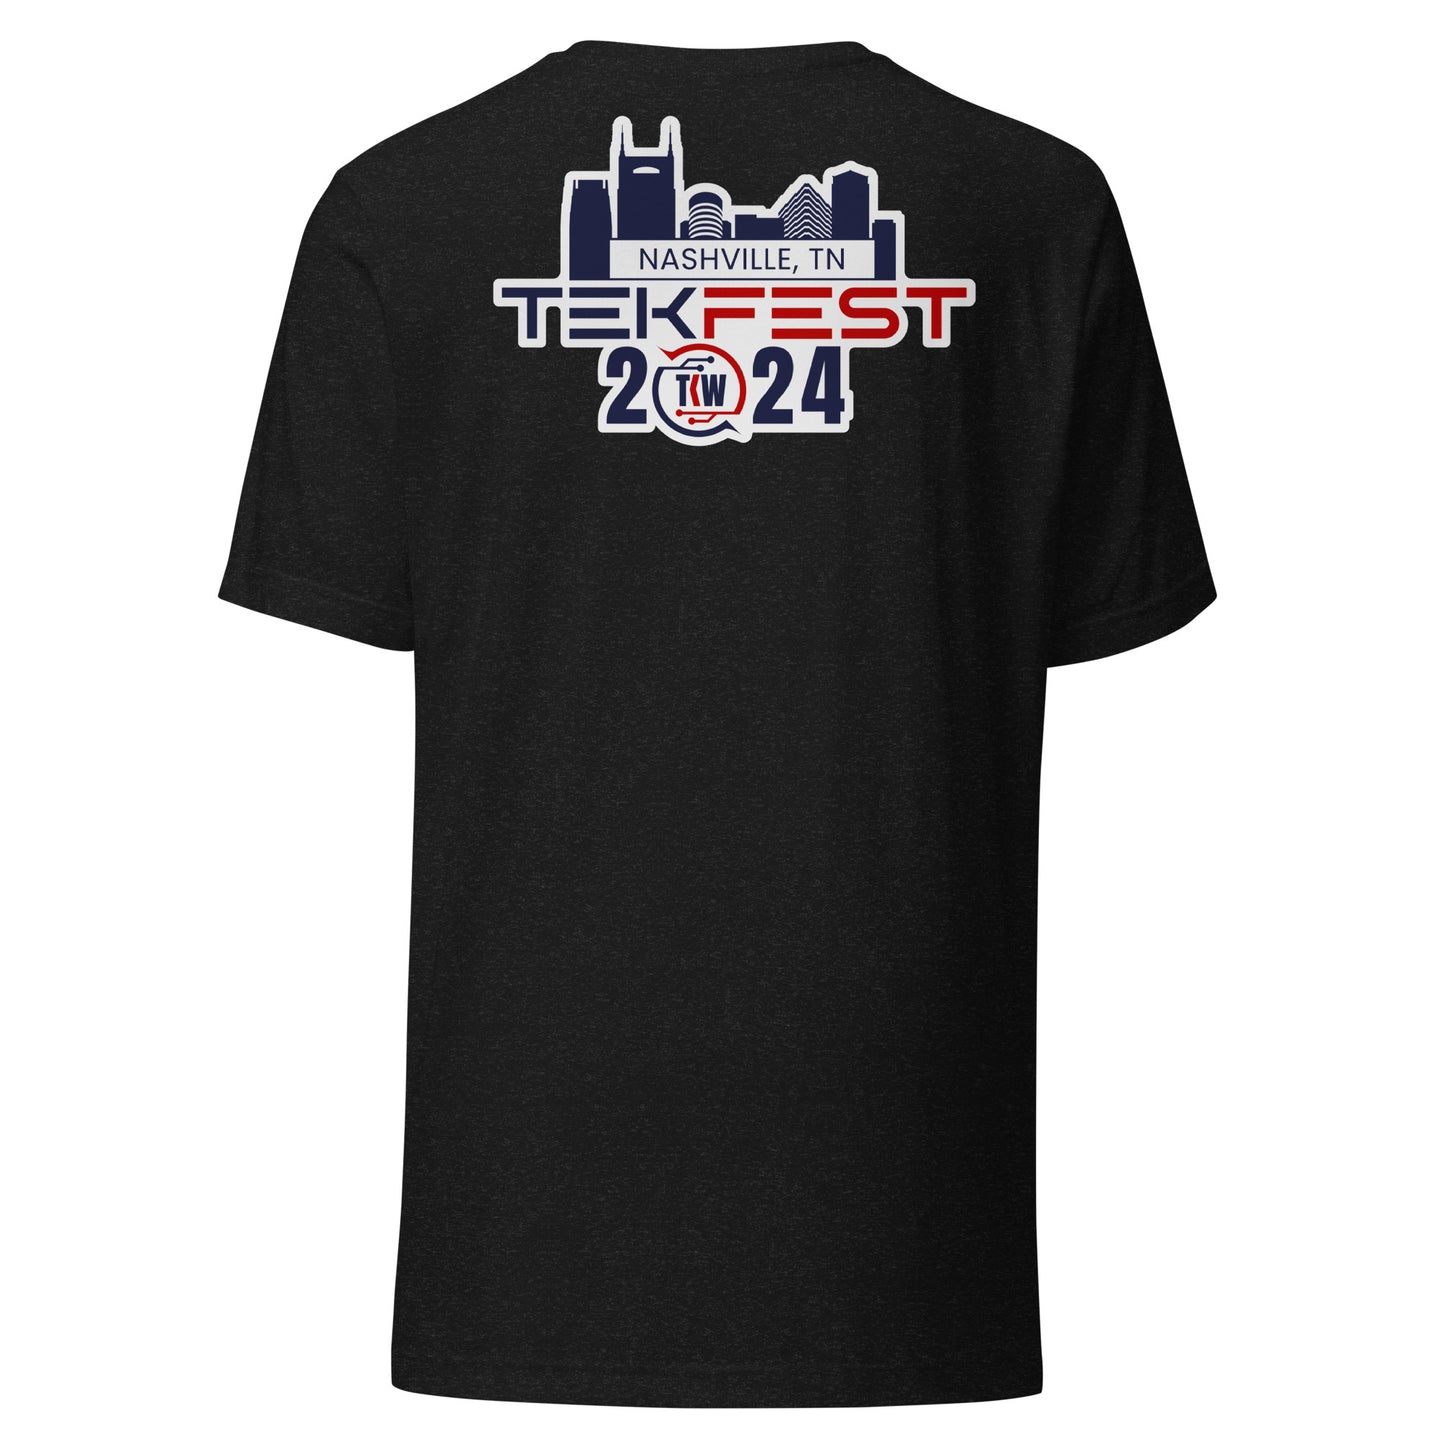 TEKFest24 Unisex t-shirt